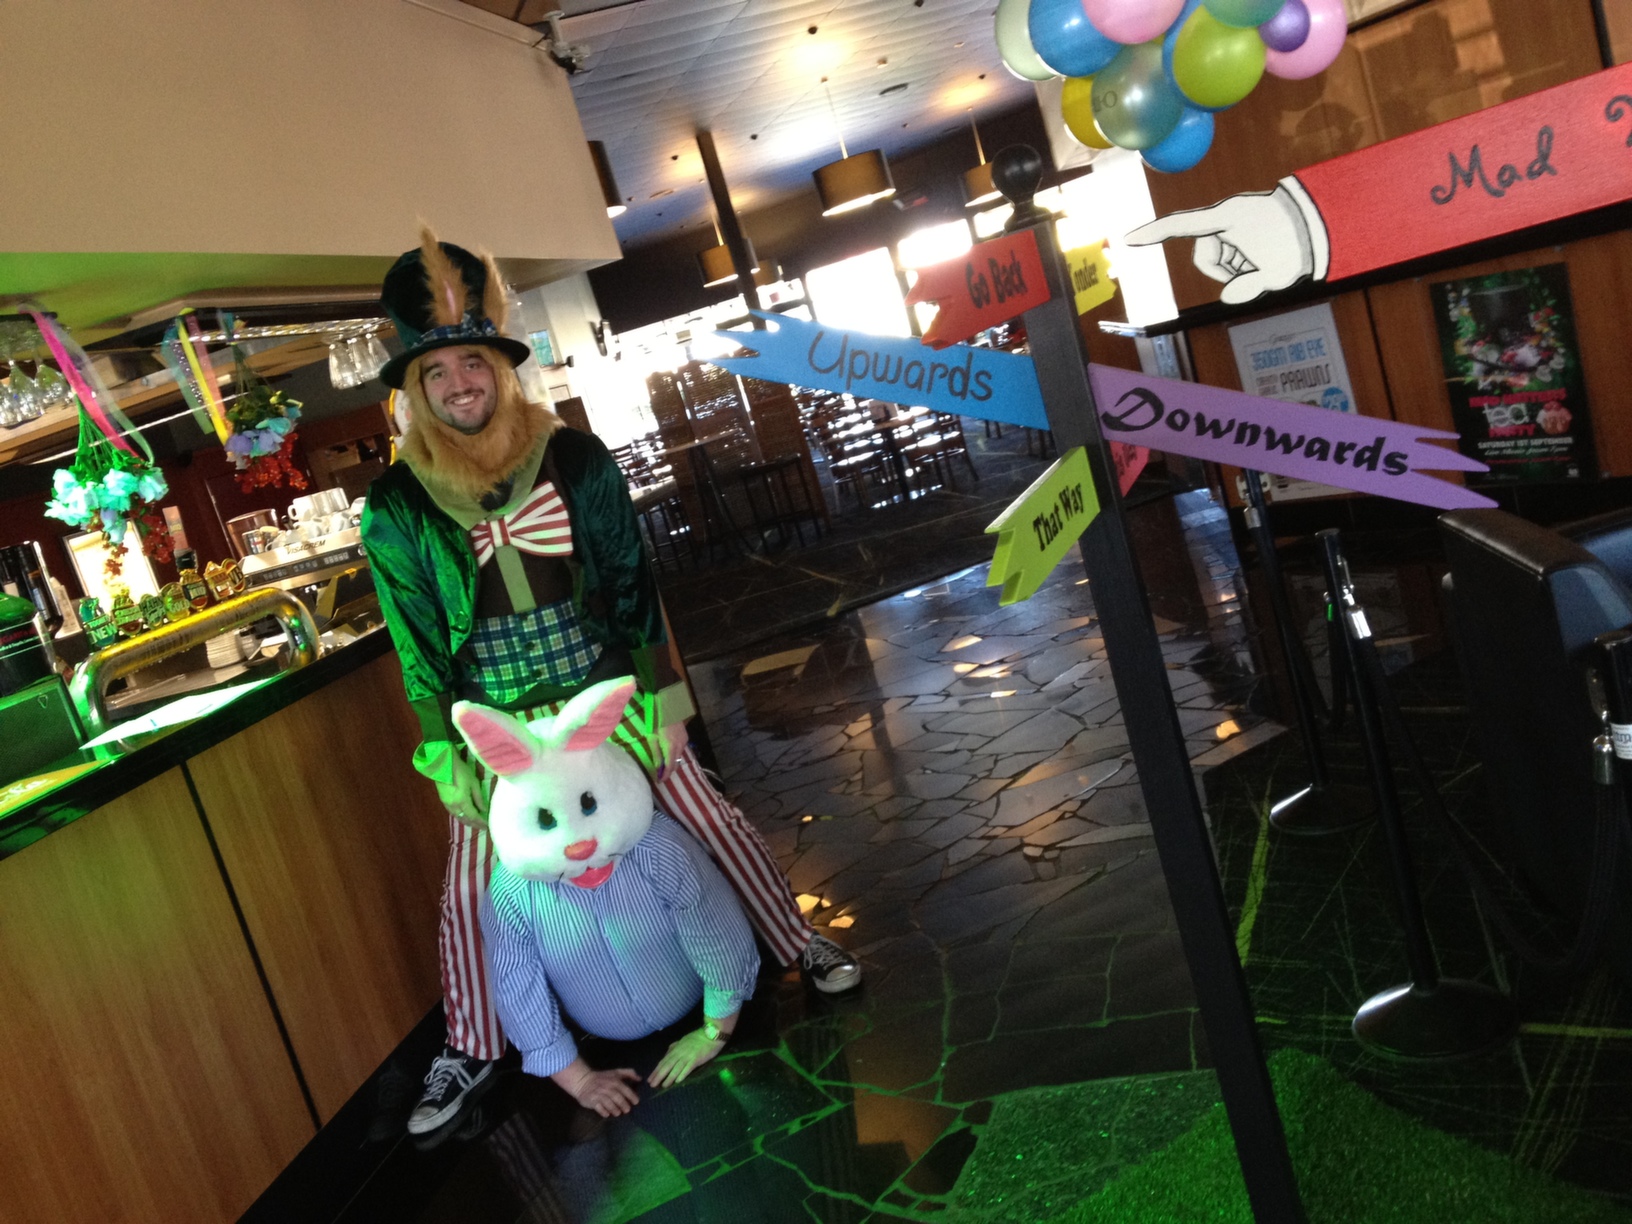 Alice in Wonderland themed props